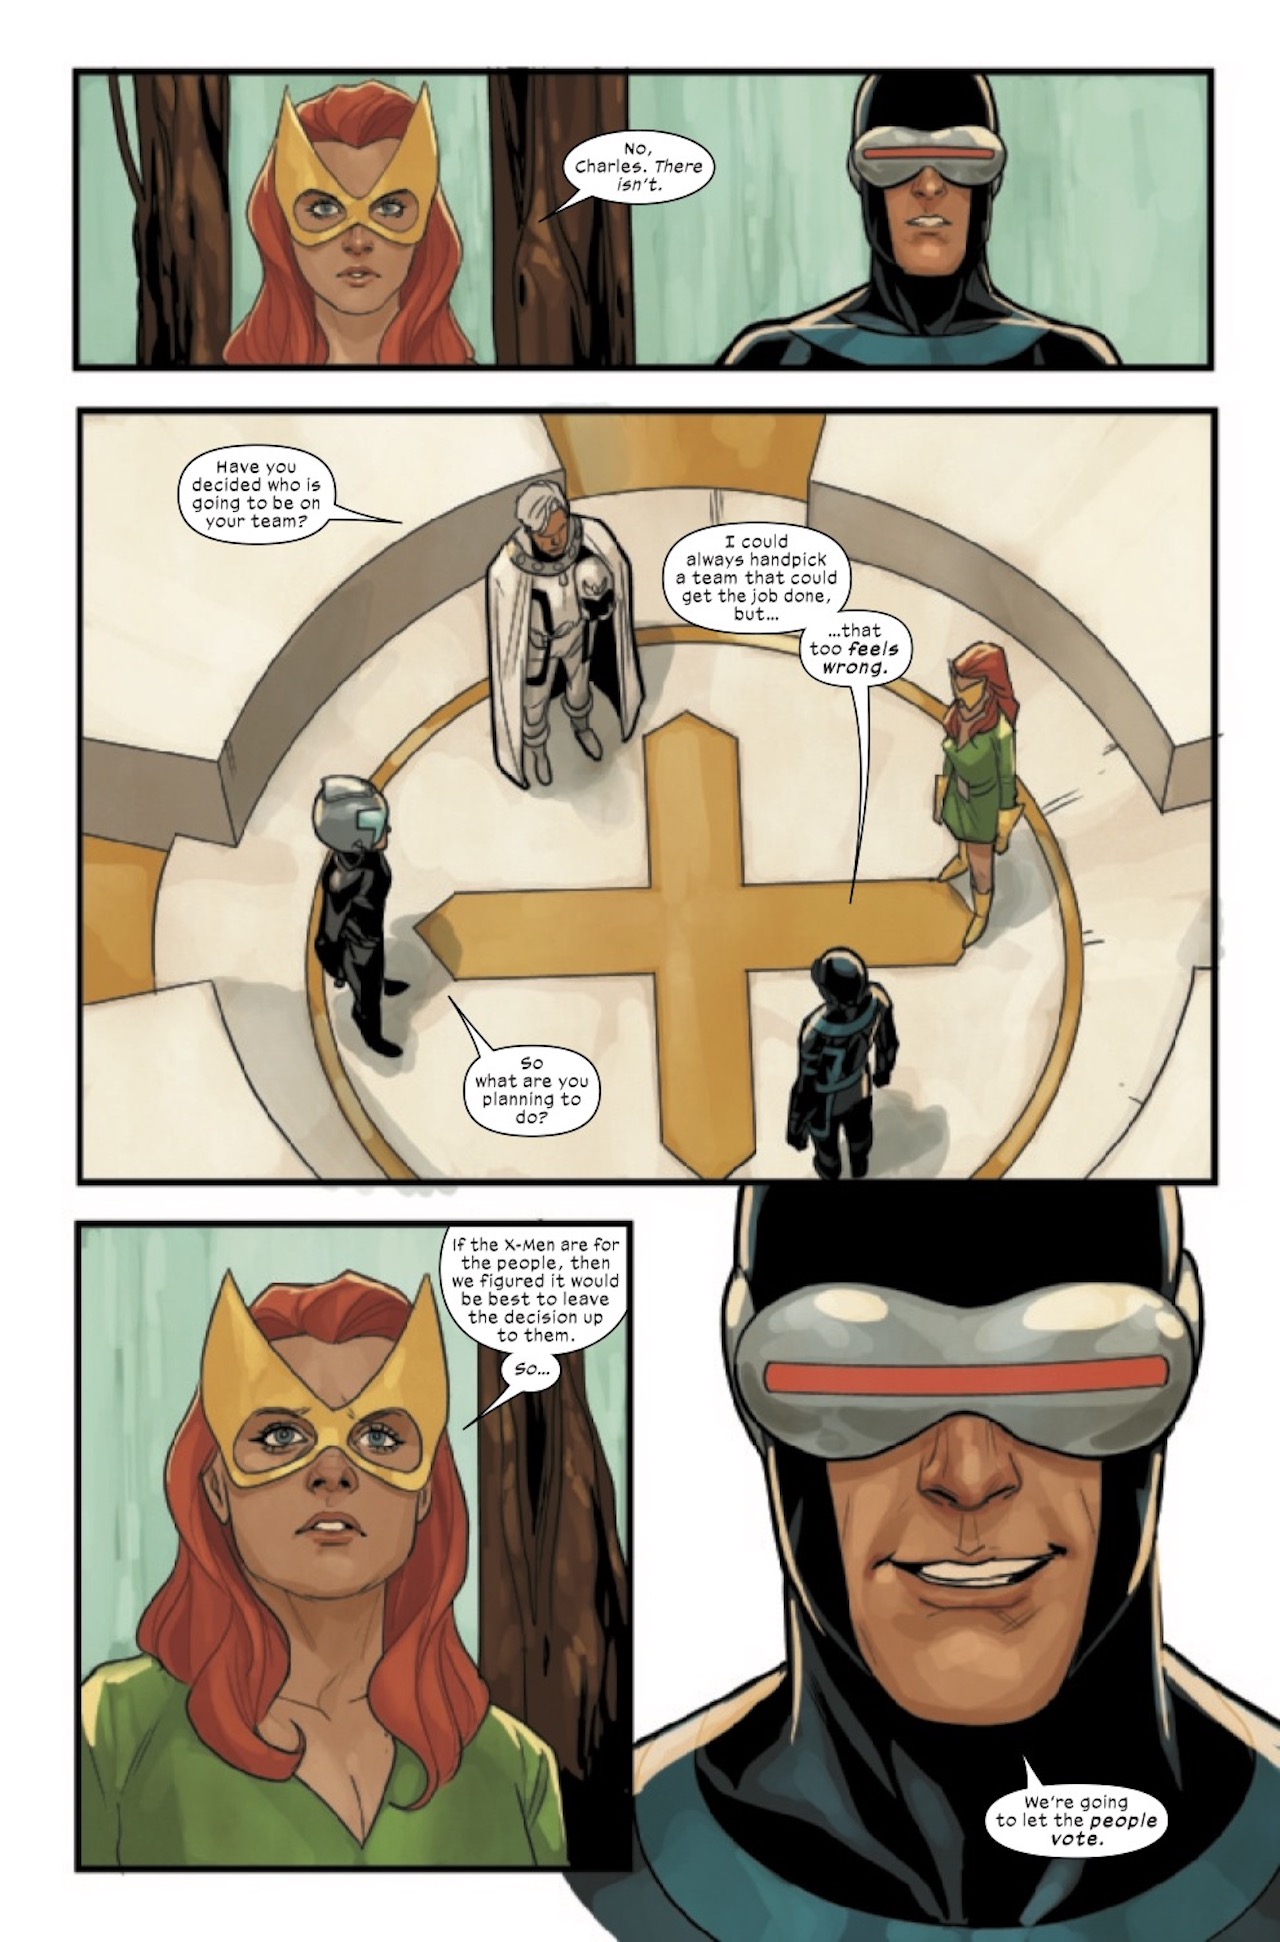 X-Men #16 establishes a whole new democratic status quo for the mutant ...